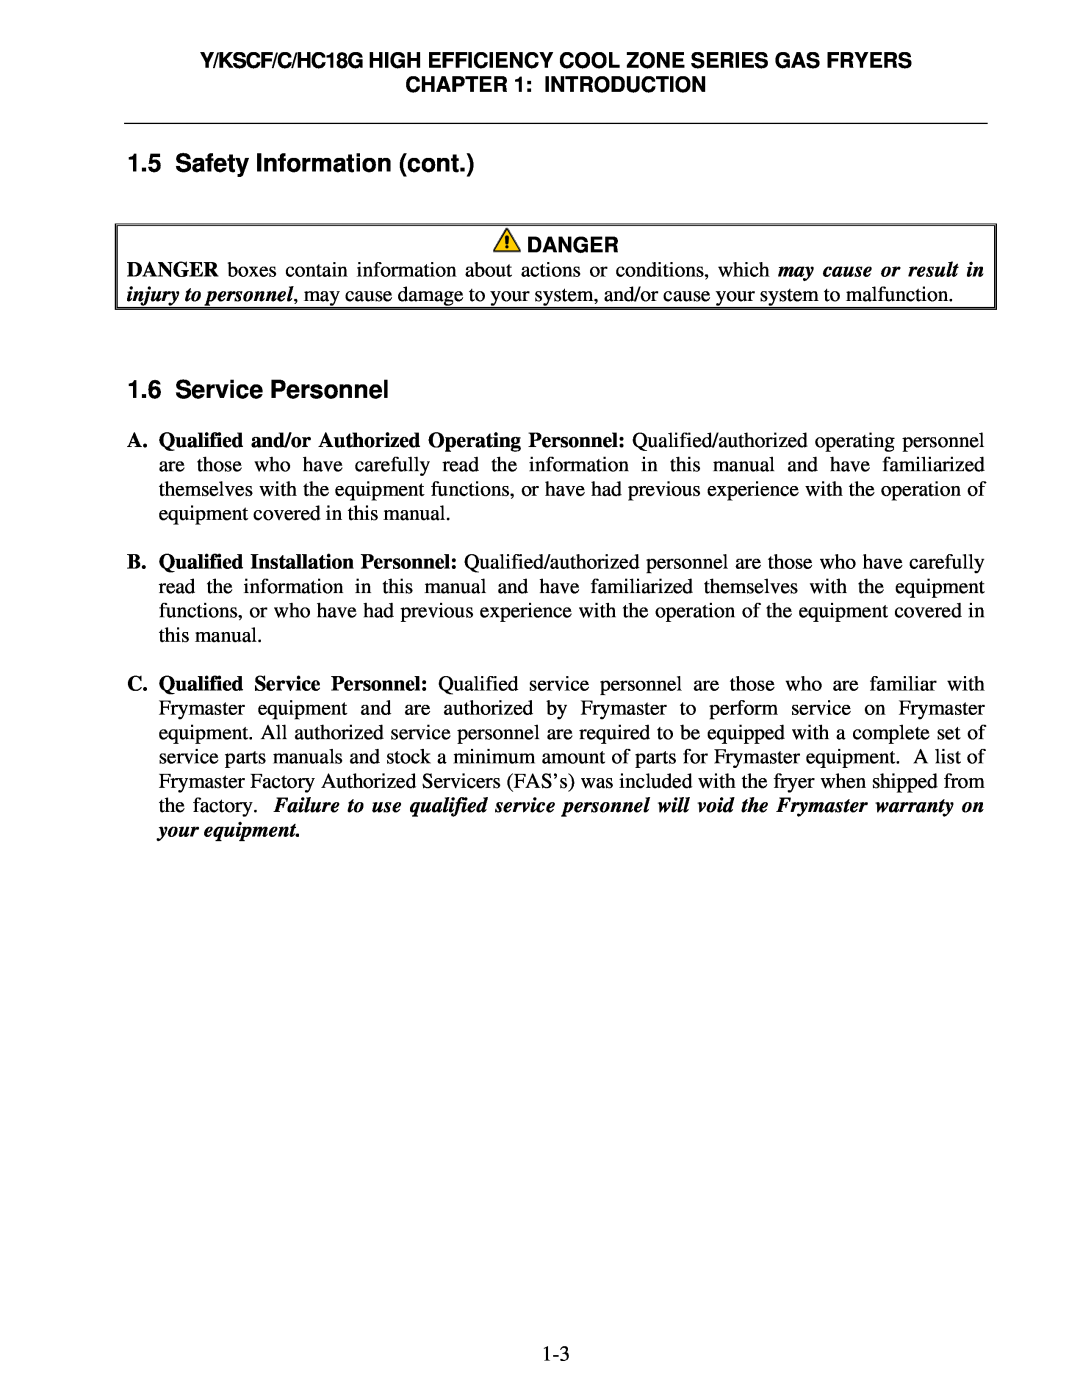 Frymaster Y/KSCF/C/HC18G operation manual Safety Information cont, Service Personnel, Danger, Introduction 